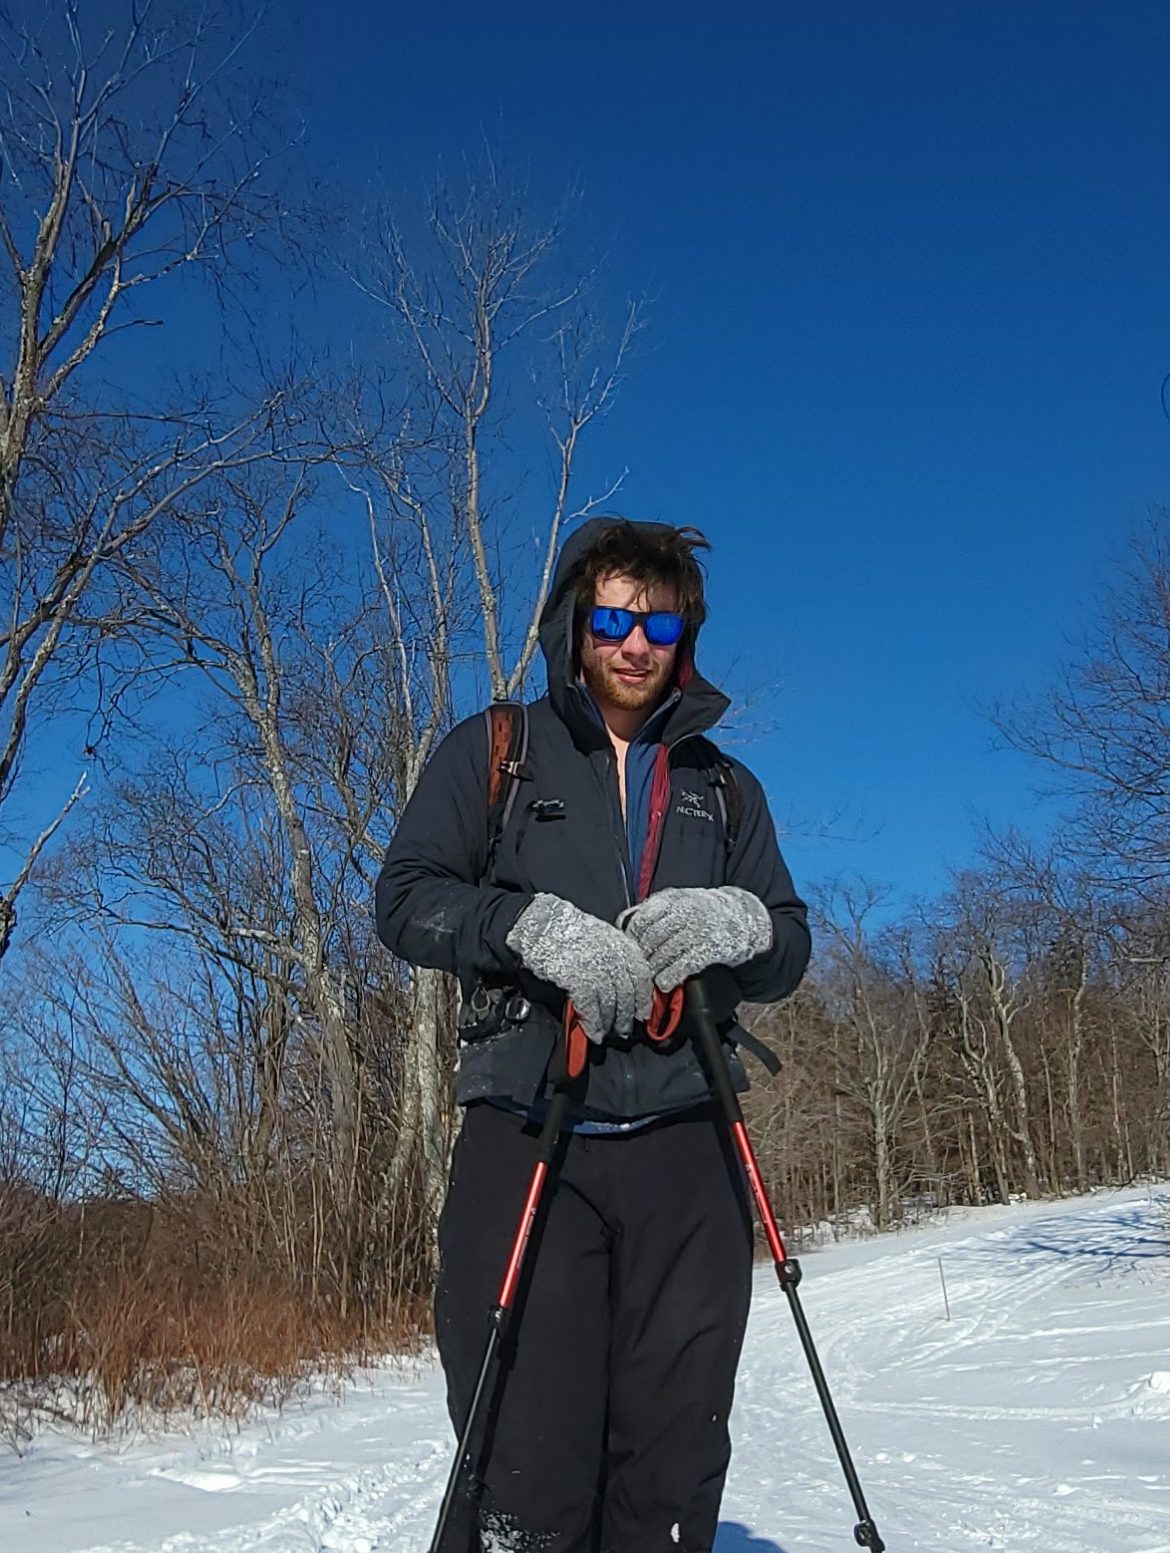 Snowboard Expert Andre Santos